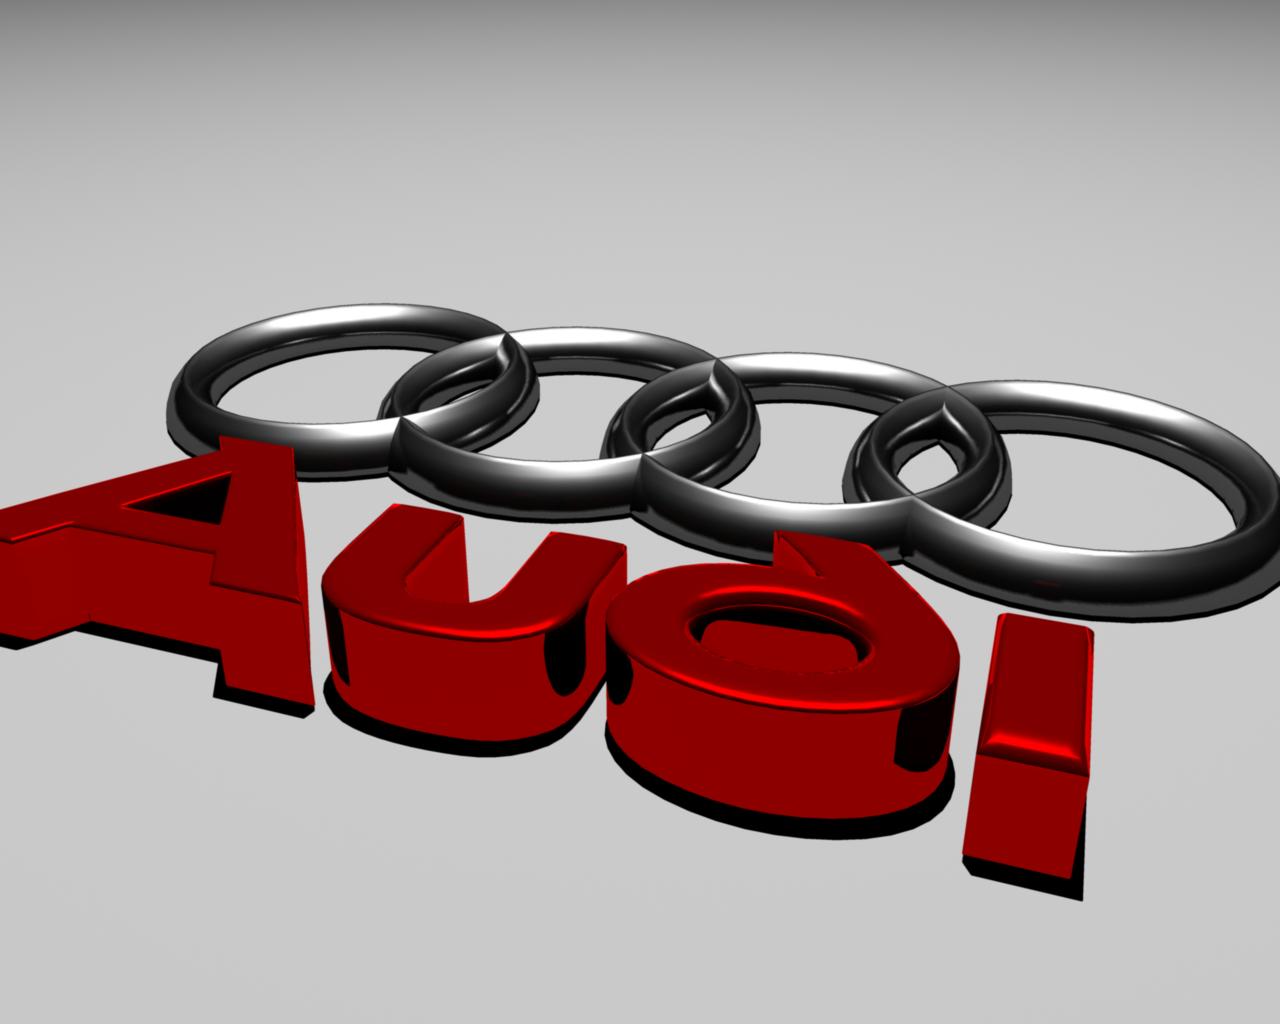 Logo Audi png download - 1280*444 - Free Transparent Audi png